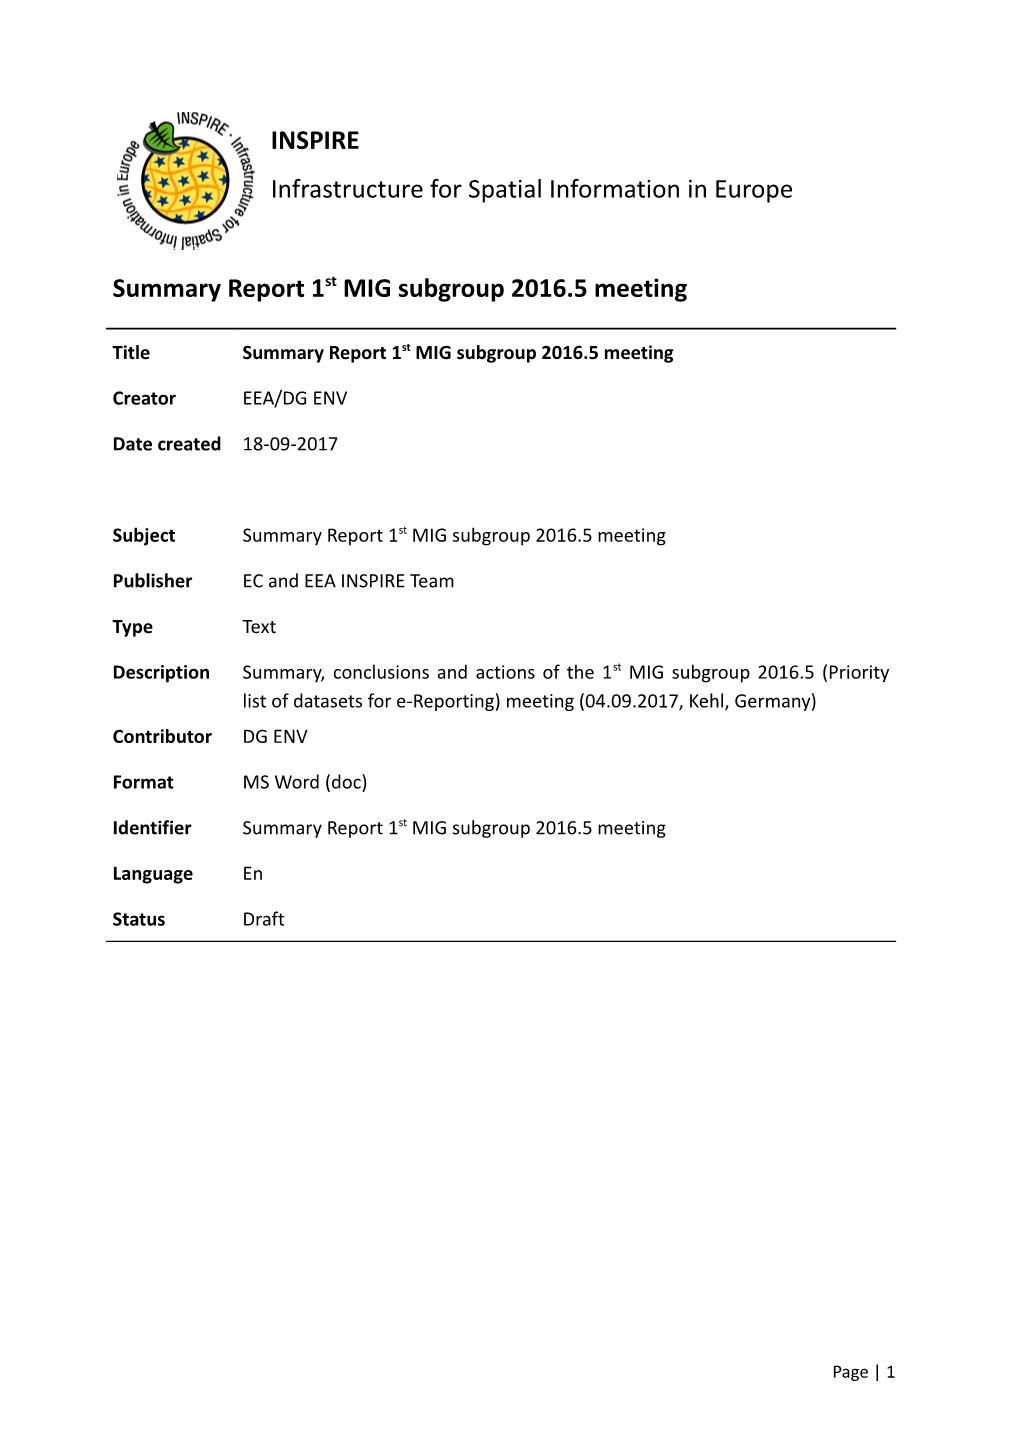 Summary Report 1St MIG Subgroup 2016.5 Meeting